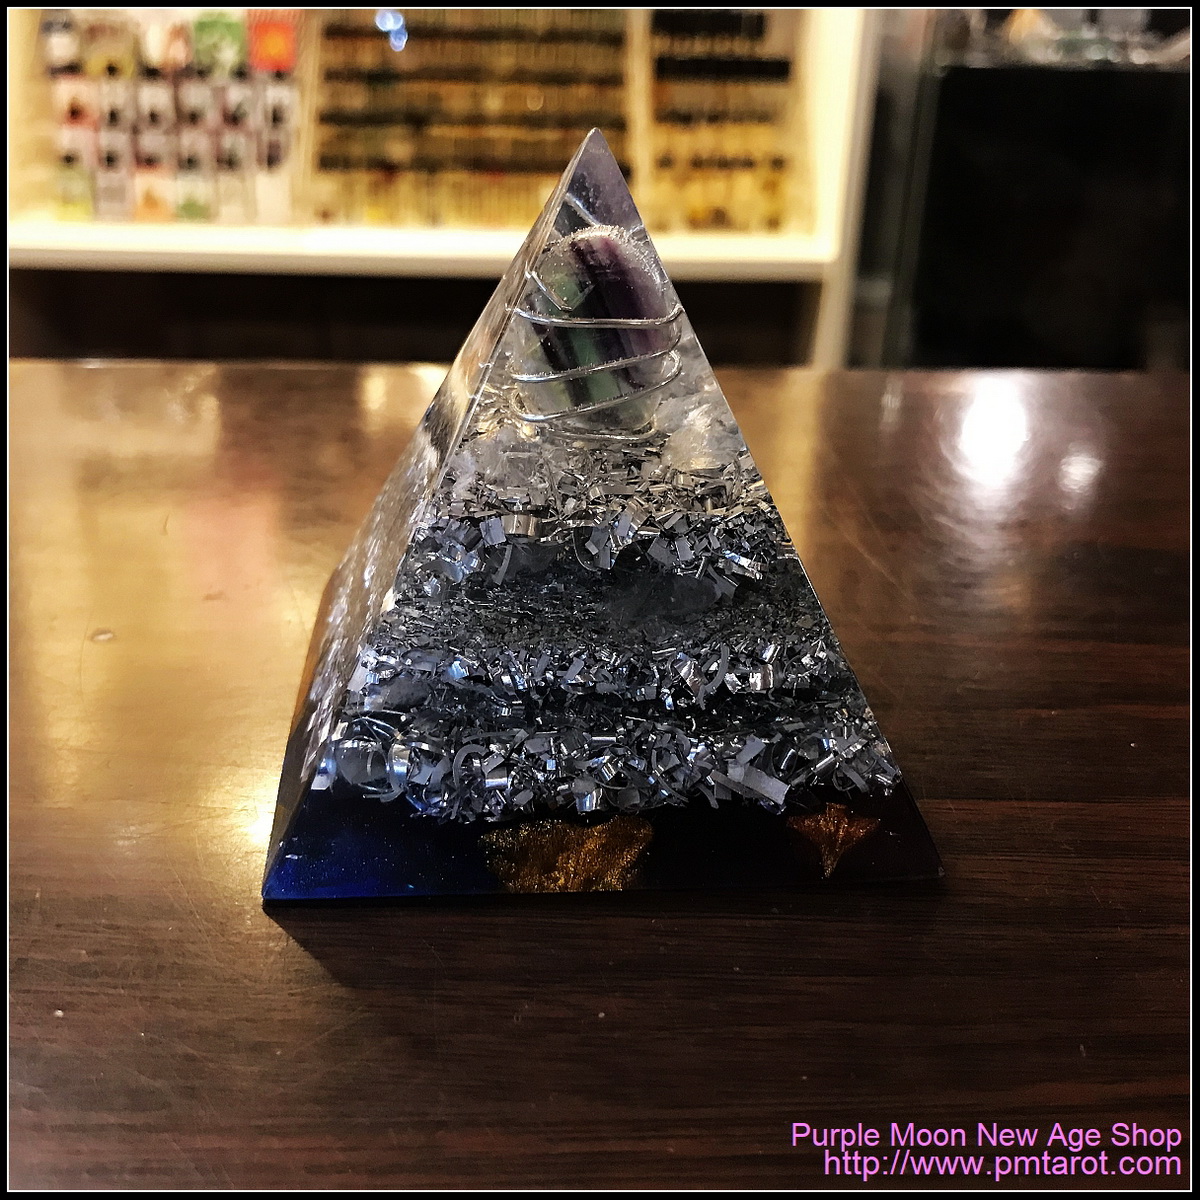 Avalon Magick x Oplusnet - Fluorite High Quality Orgonite Pyramid